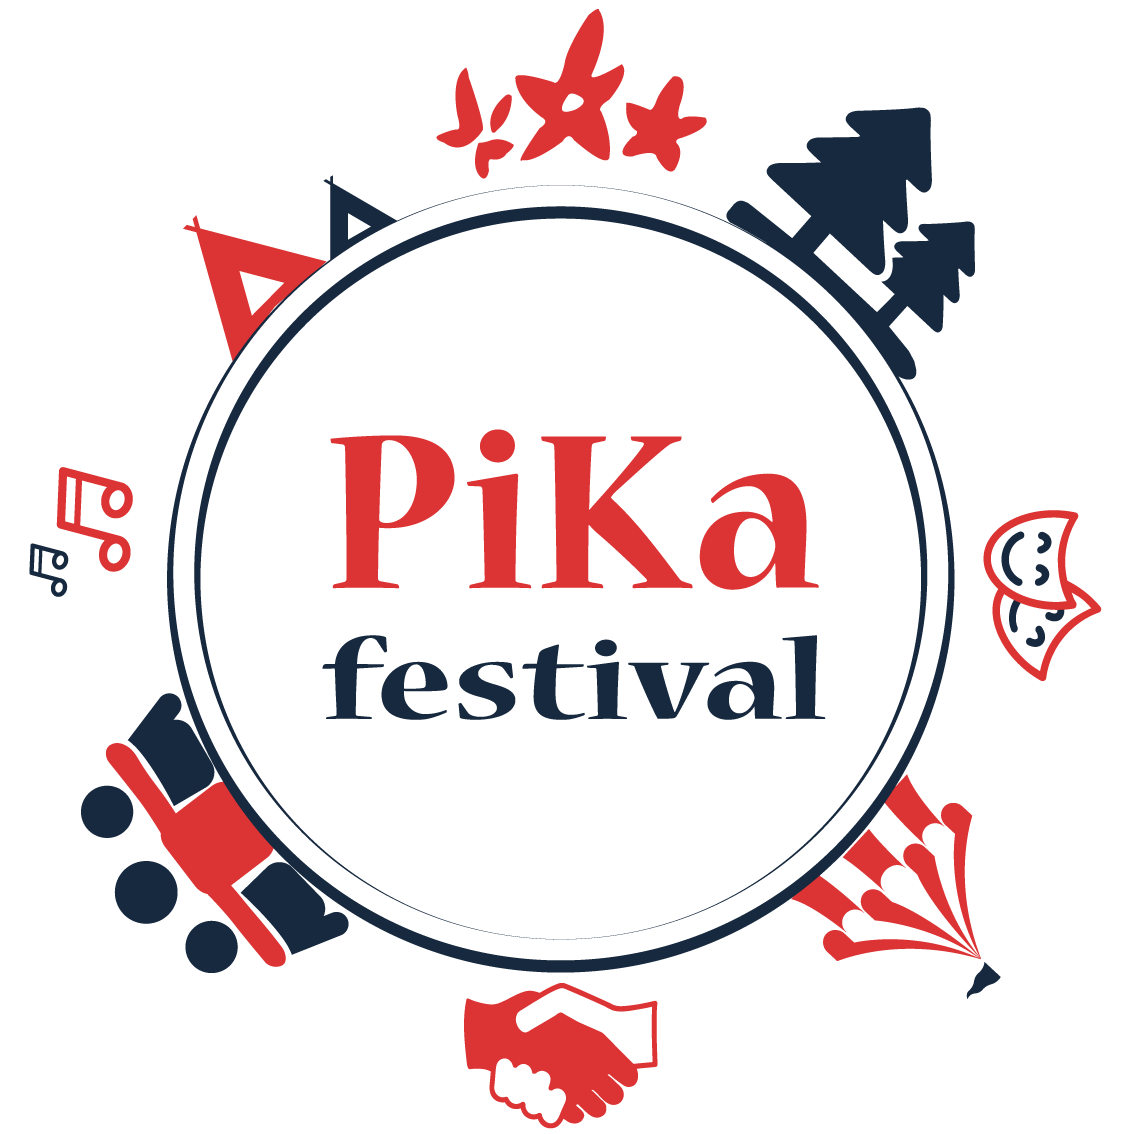 PiKa festival